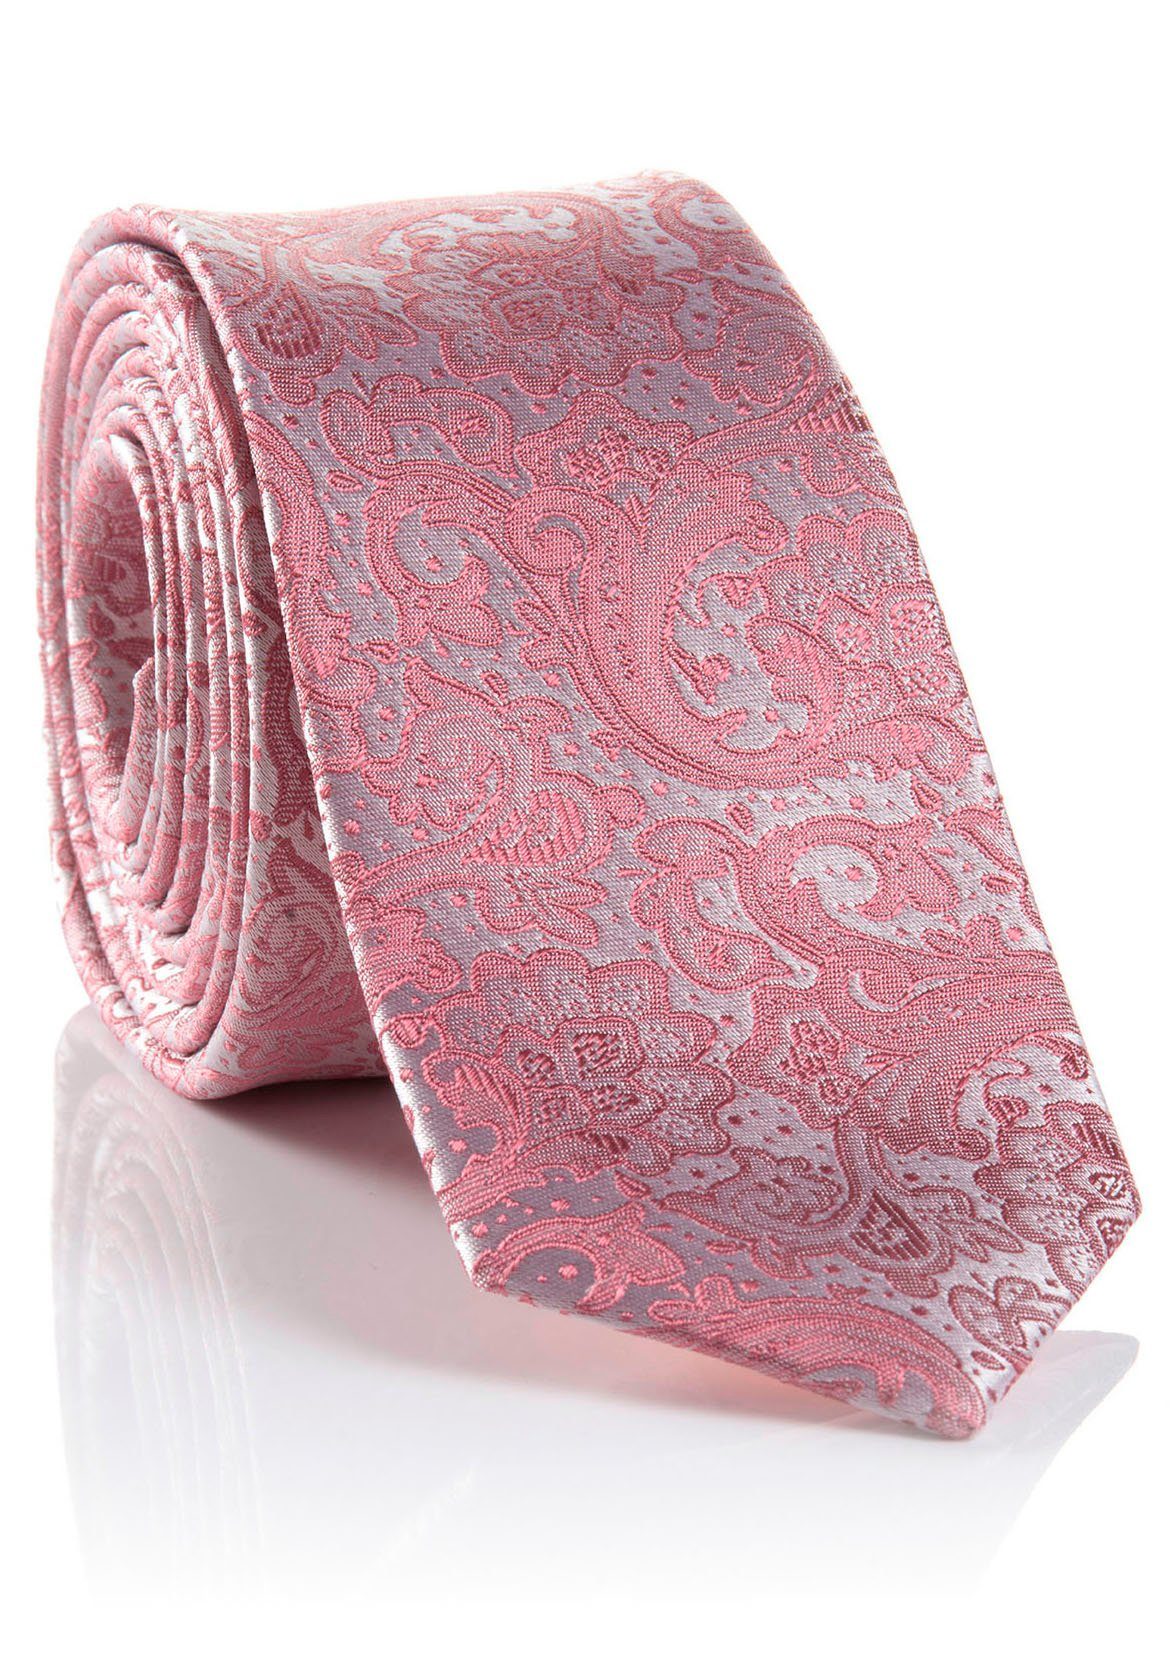 Paisley-Muster Seide, MONTI aus Krawatte red LELIO bright Krawatte reiner